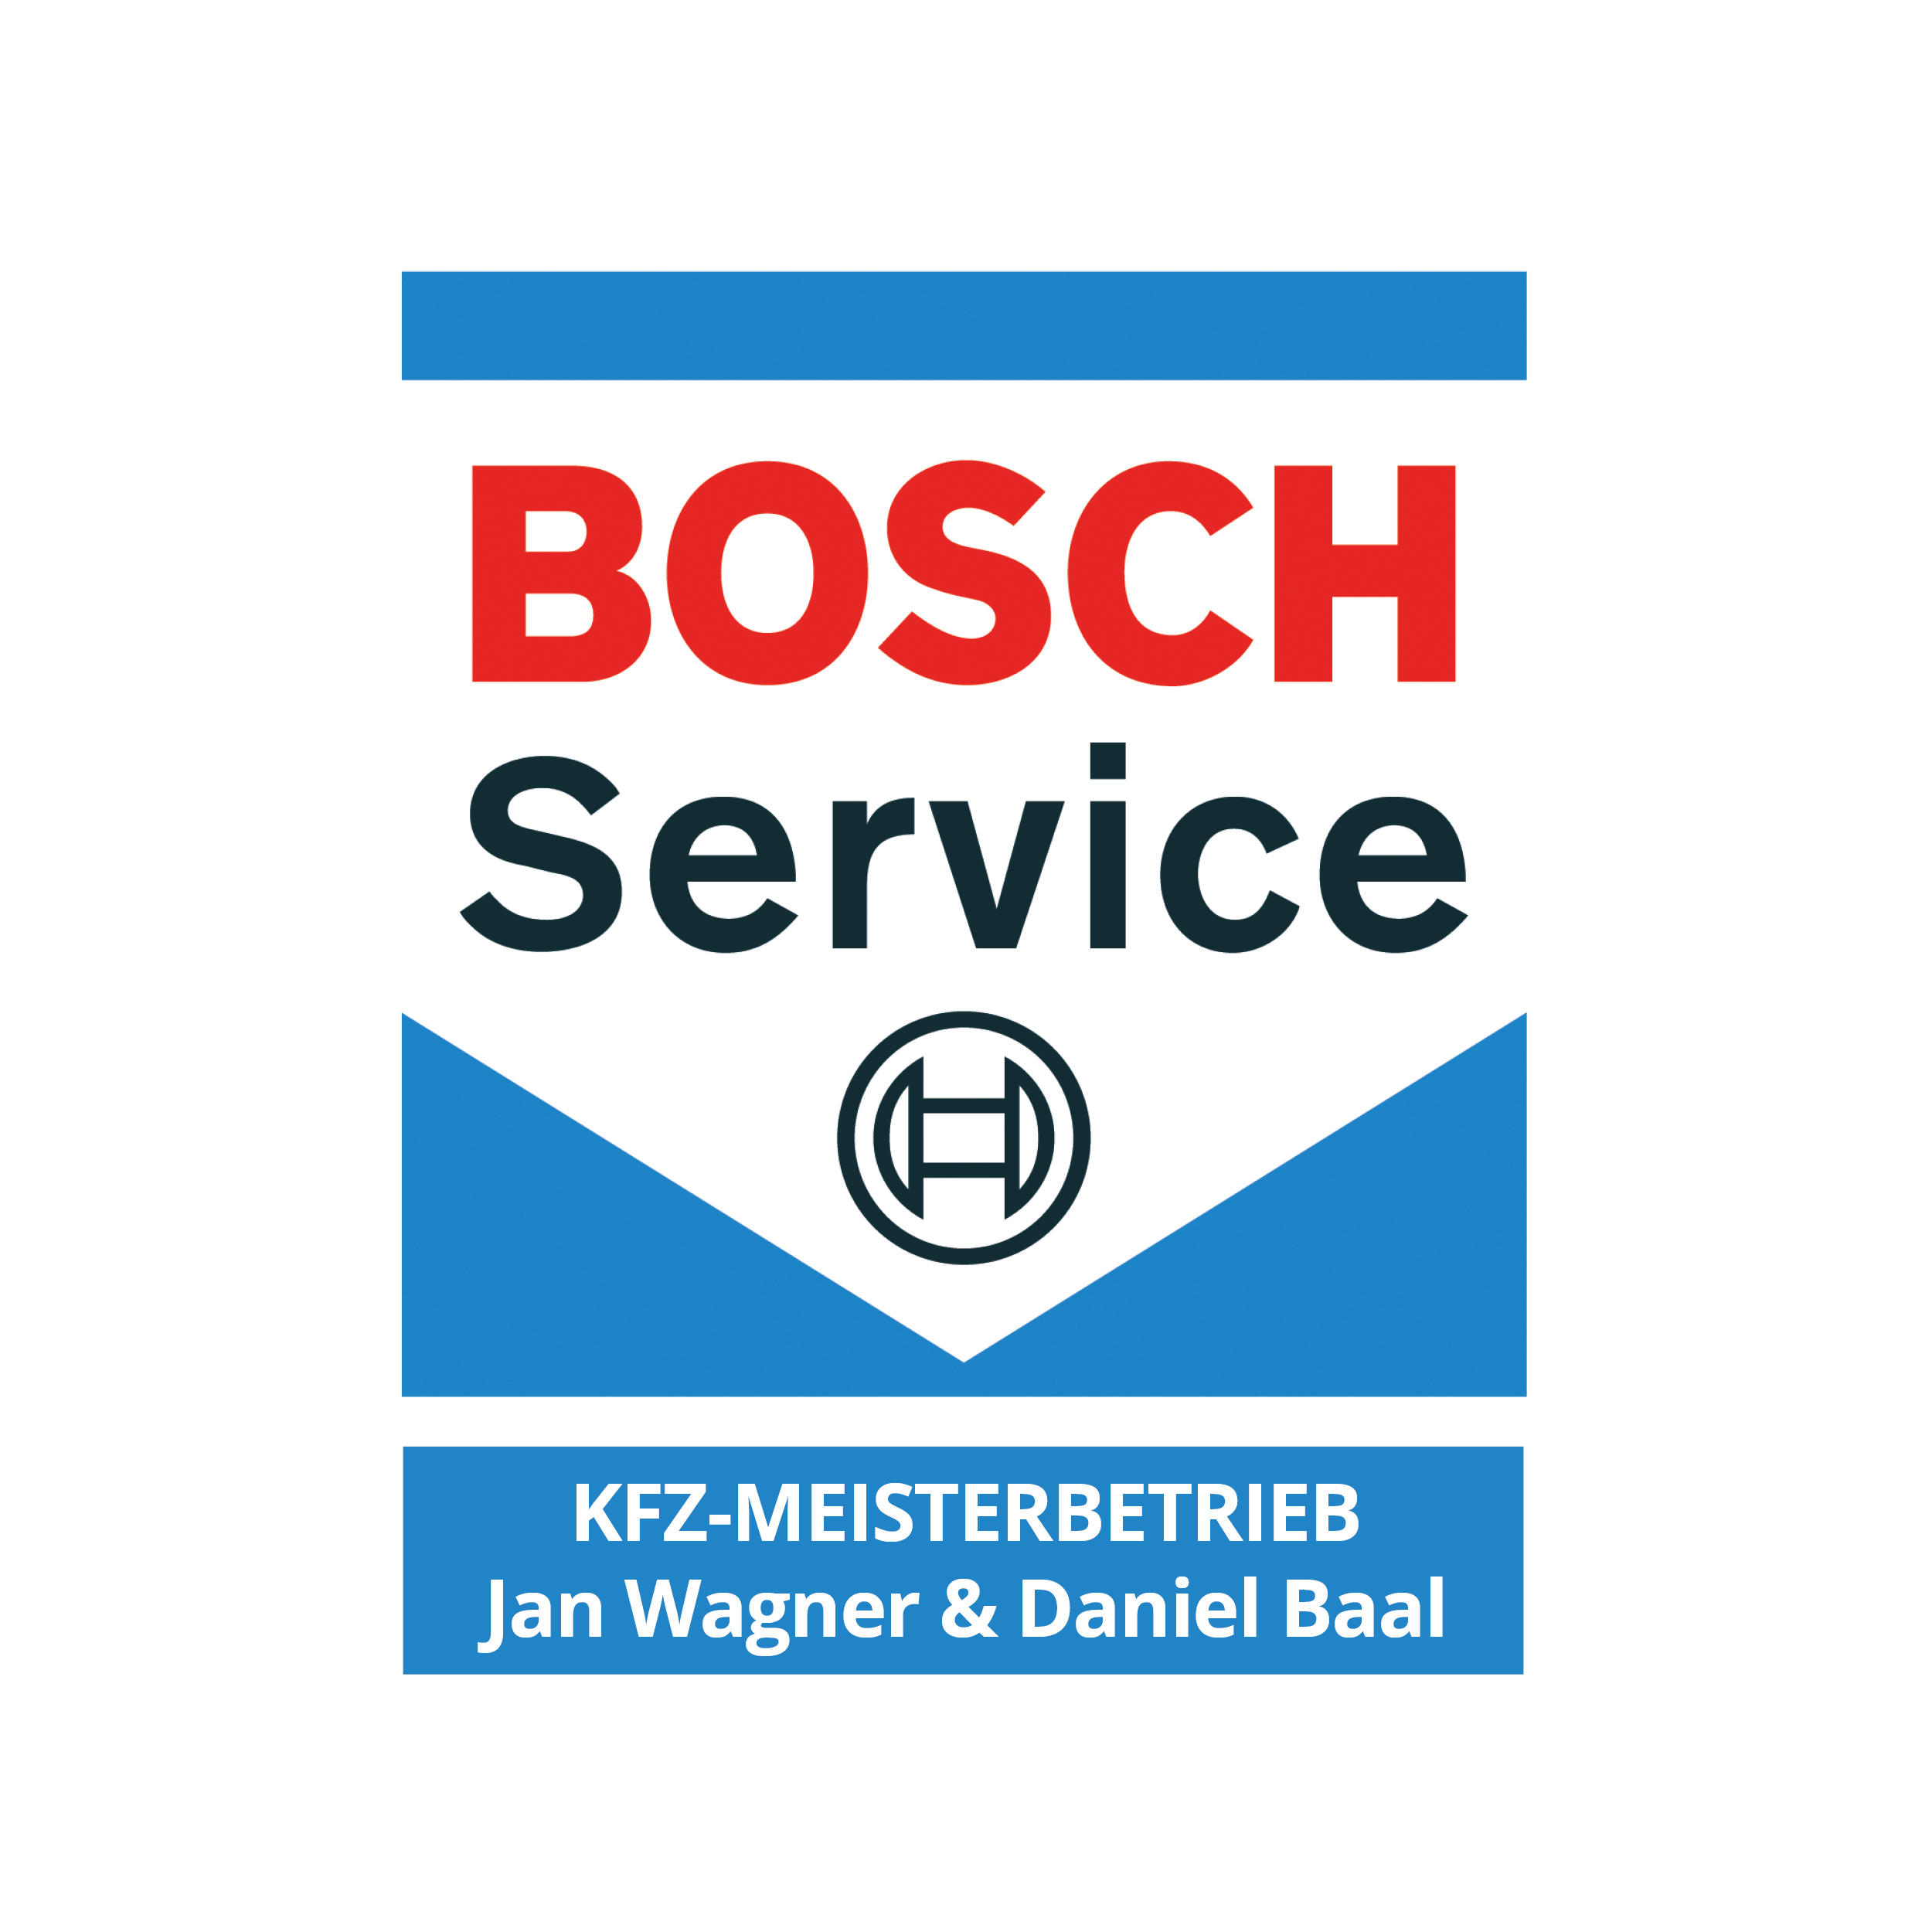 Kfz-Meisterbetrieb Jan Wagner & Daniel Baal GbR in Sankt Katharinen bei Linz am Rhein - Logo